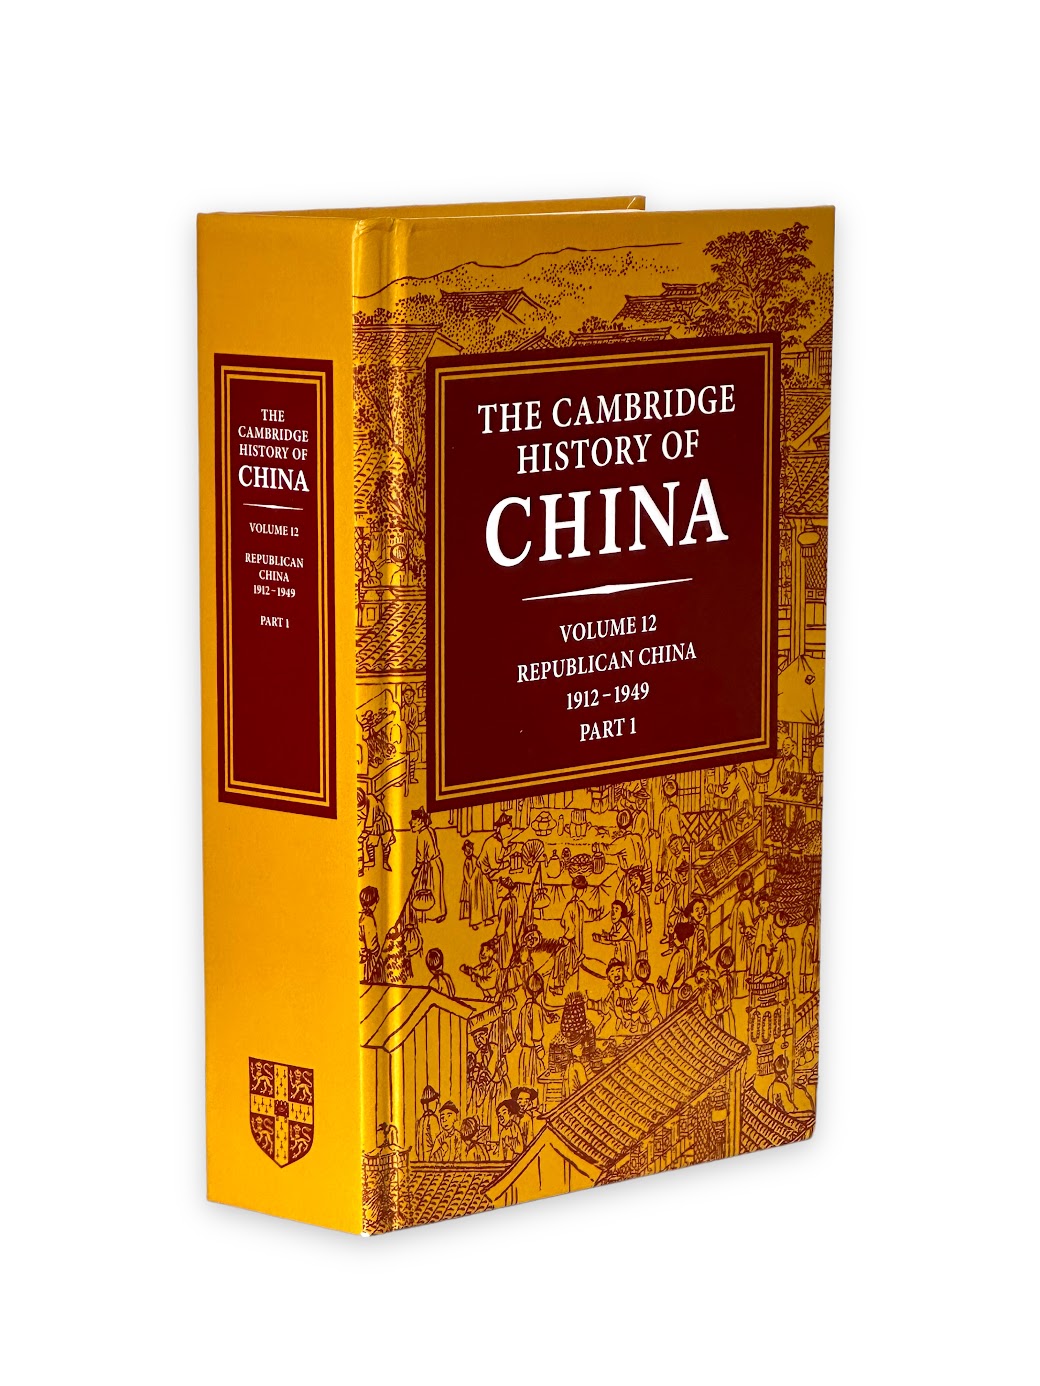 The Cambridge History of China, Volume 12: Republican China, 1912-1949, Part 1 - Fairbank, John K. [Editor]